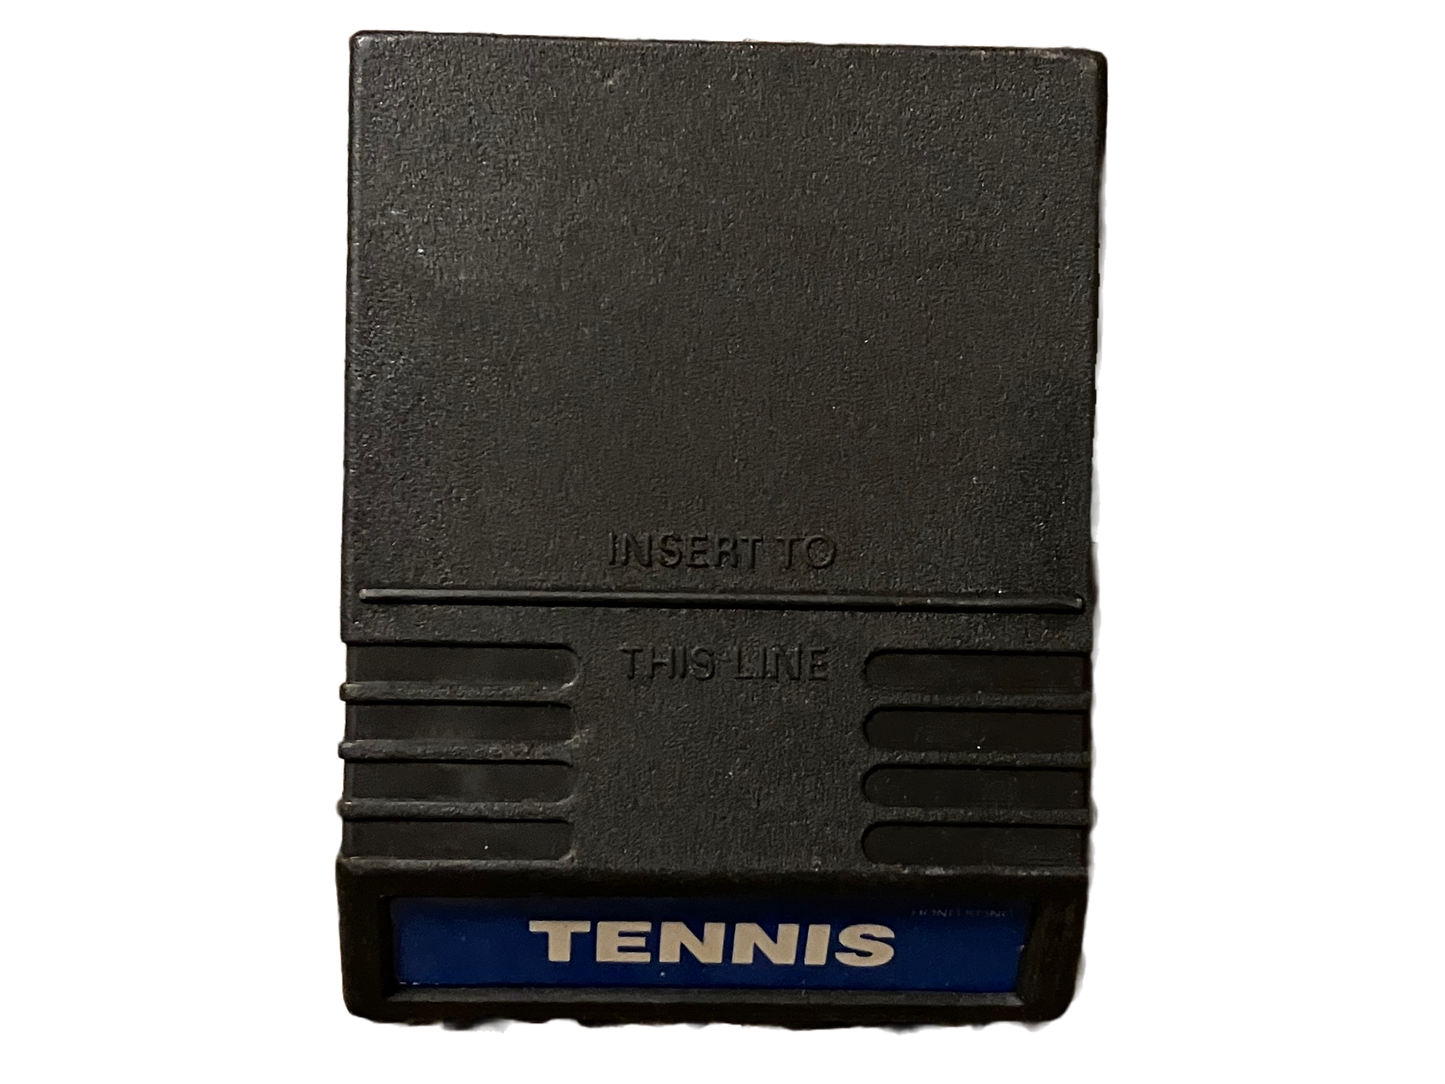 Tennis Intellivision Video Game